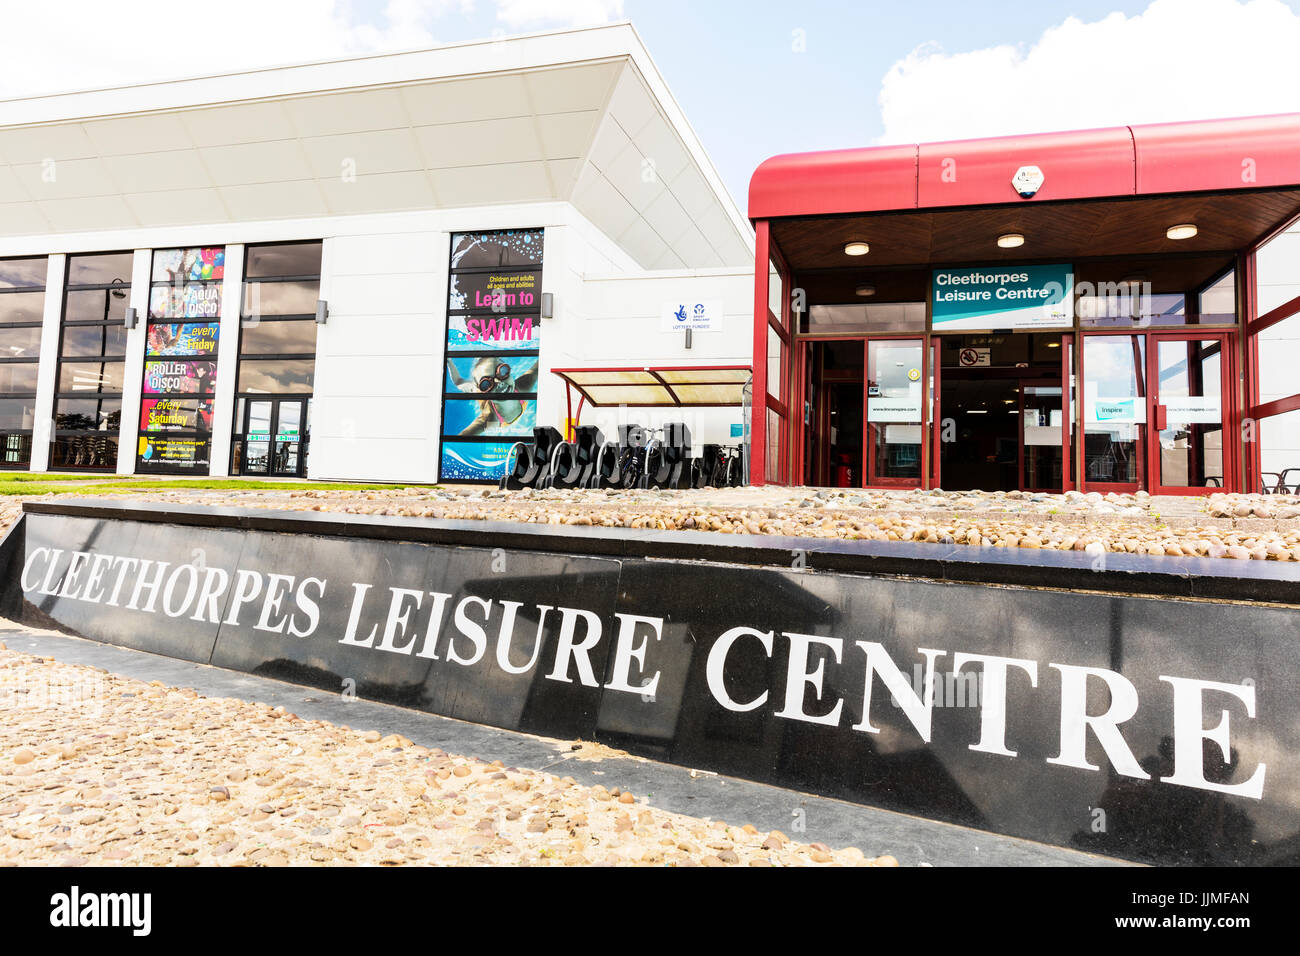 Cleethorpes, Regno Unito, Cleethorpes Leisure Centre, Cleethorpes Leisure Centre, Cleethorpes UK Leisure Centre e il centro svaghi, centri di svago, Foto Stock